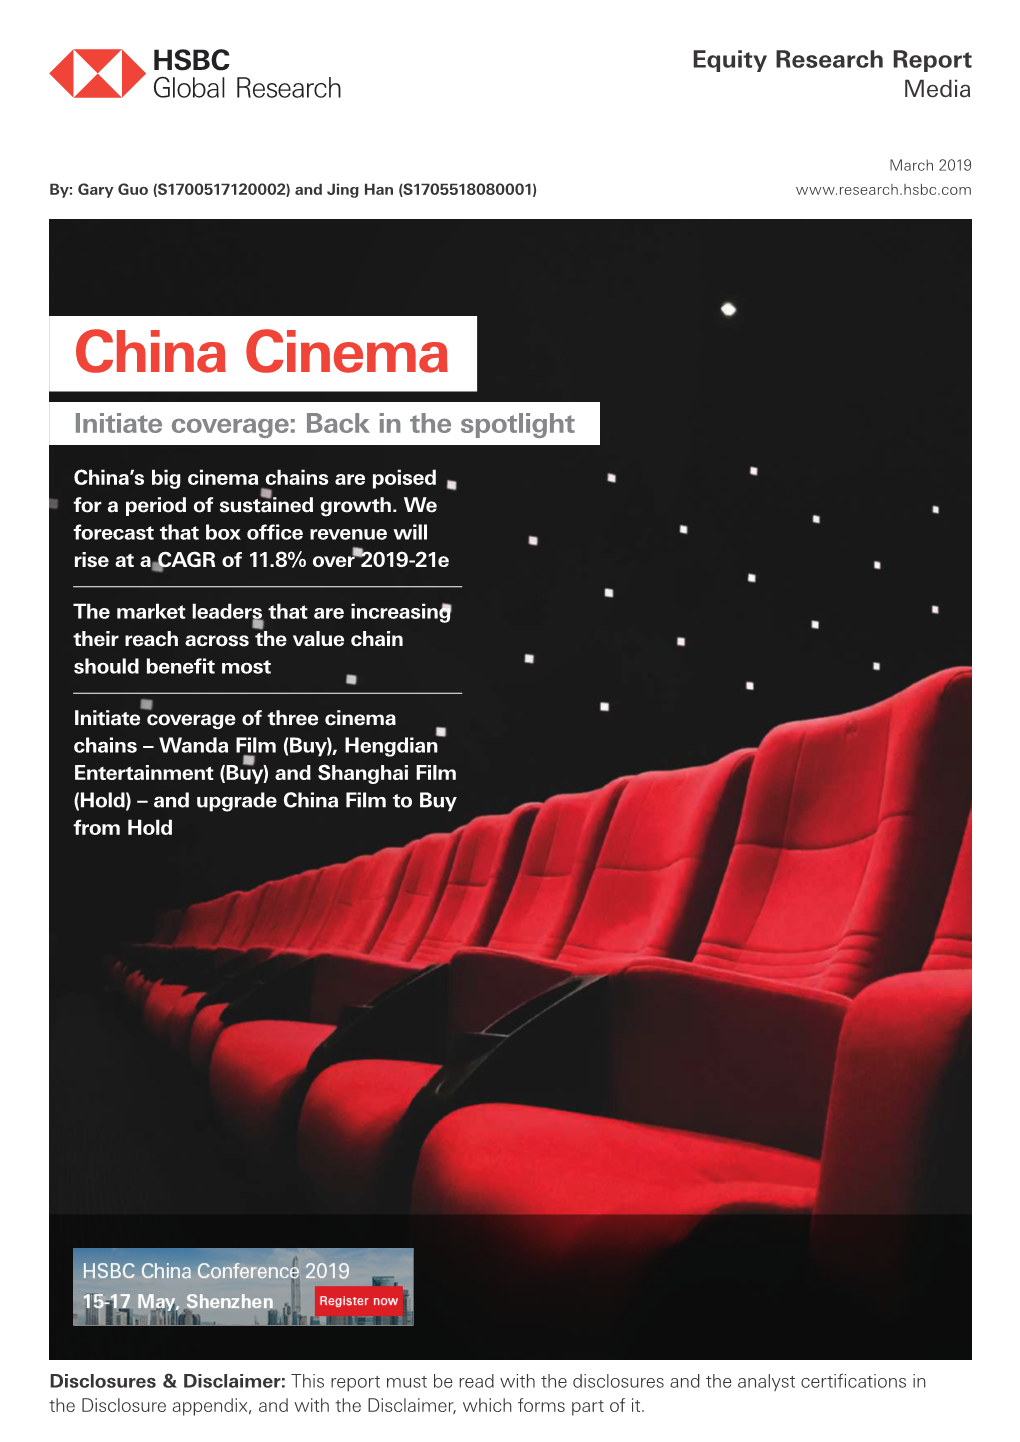 China Cinema Initiate Coverage: Back in the Spotlight